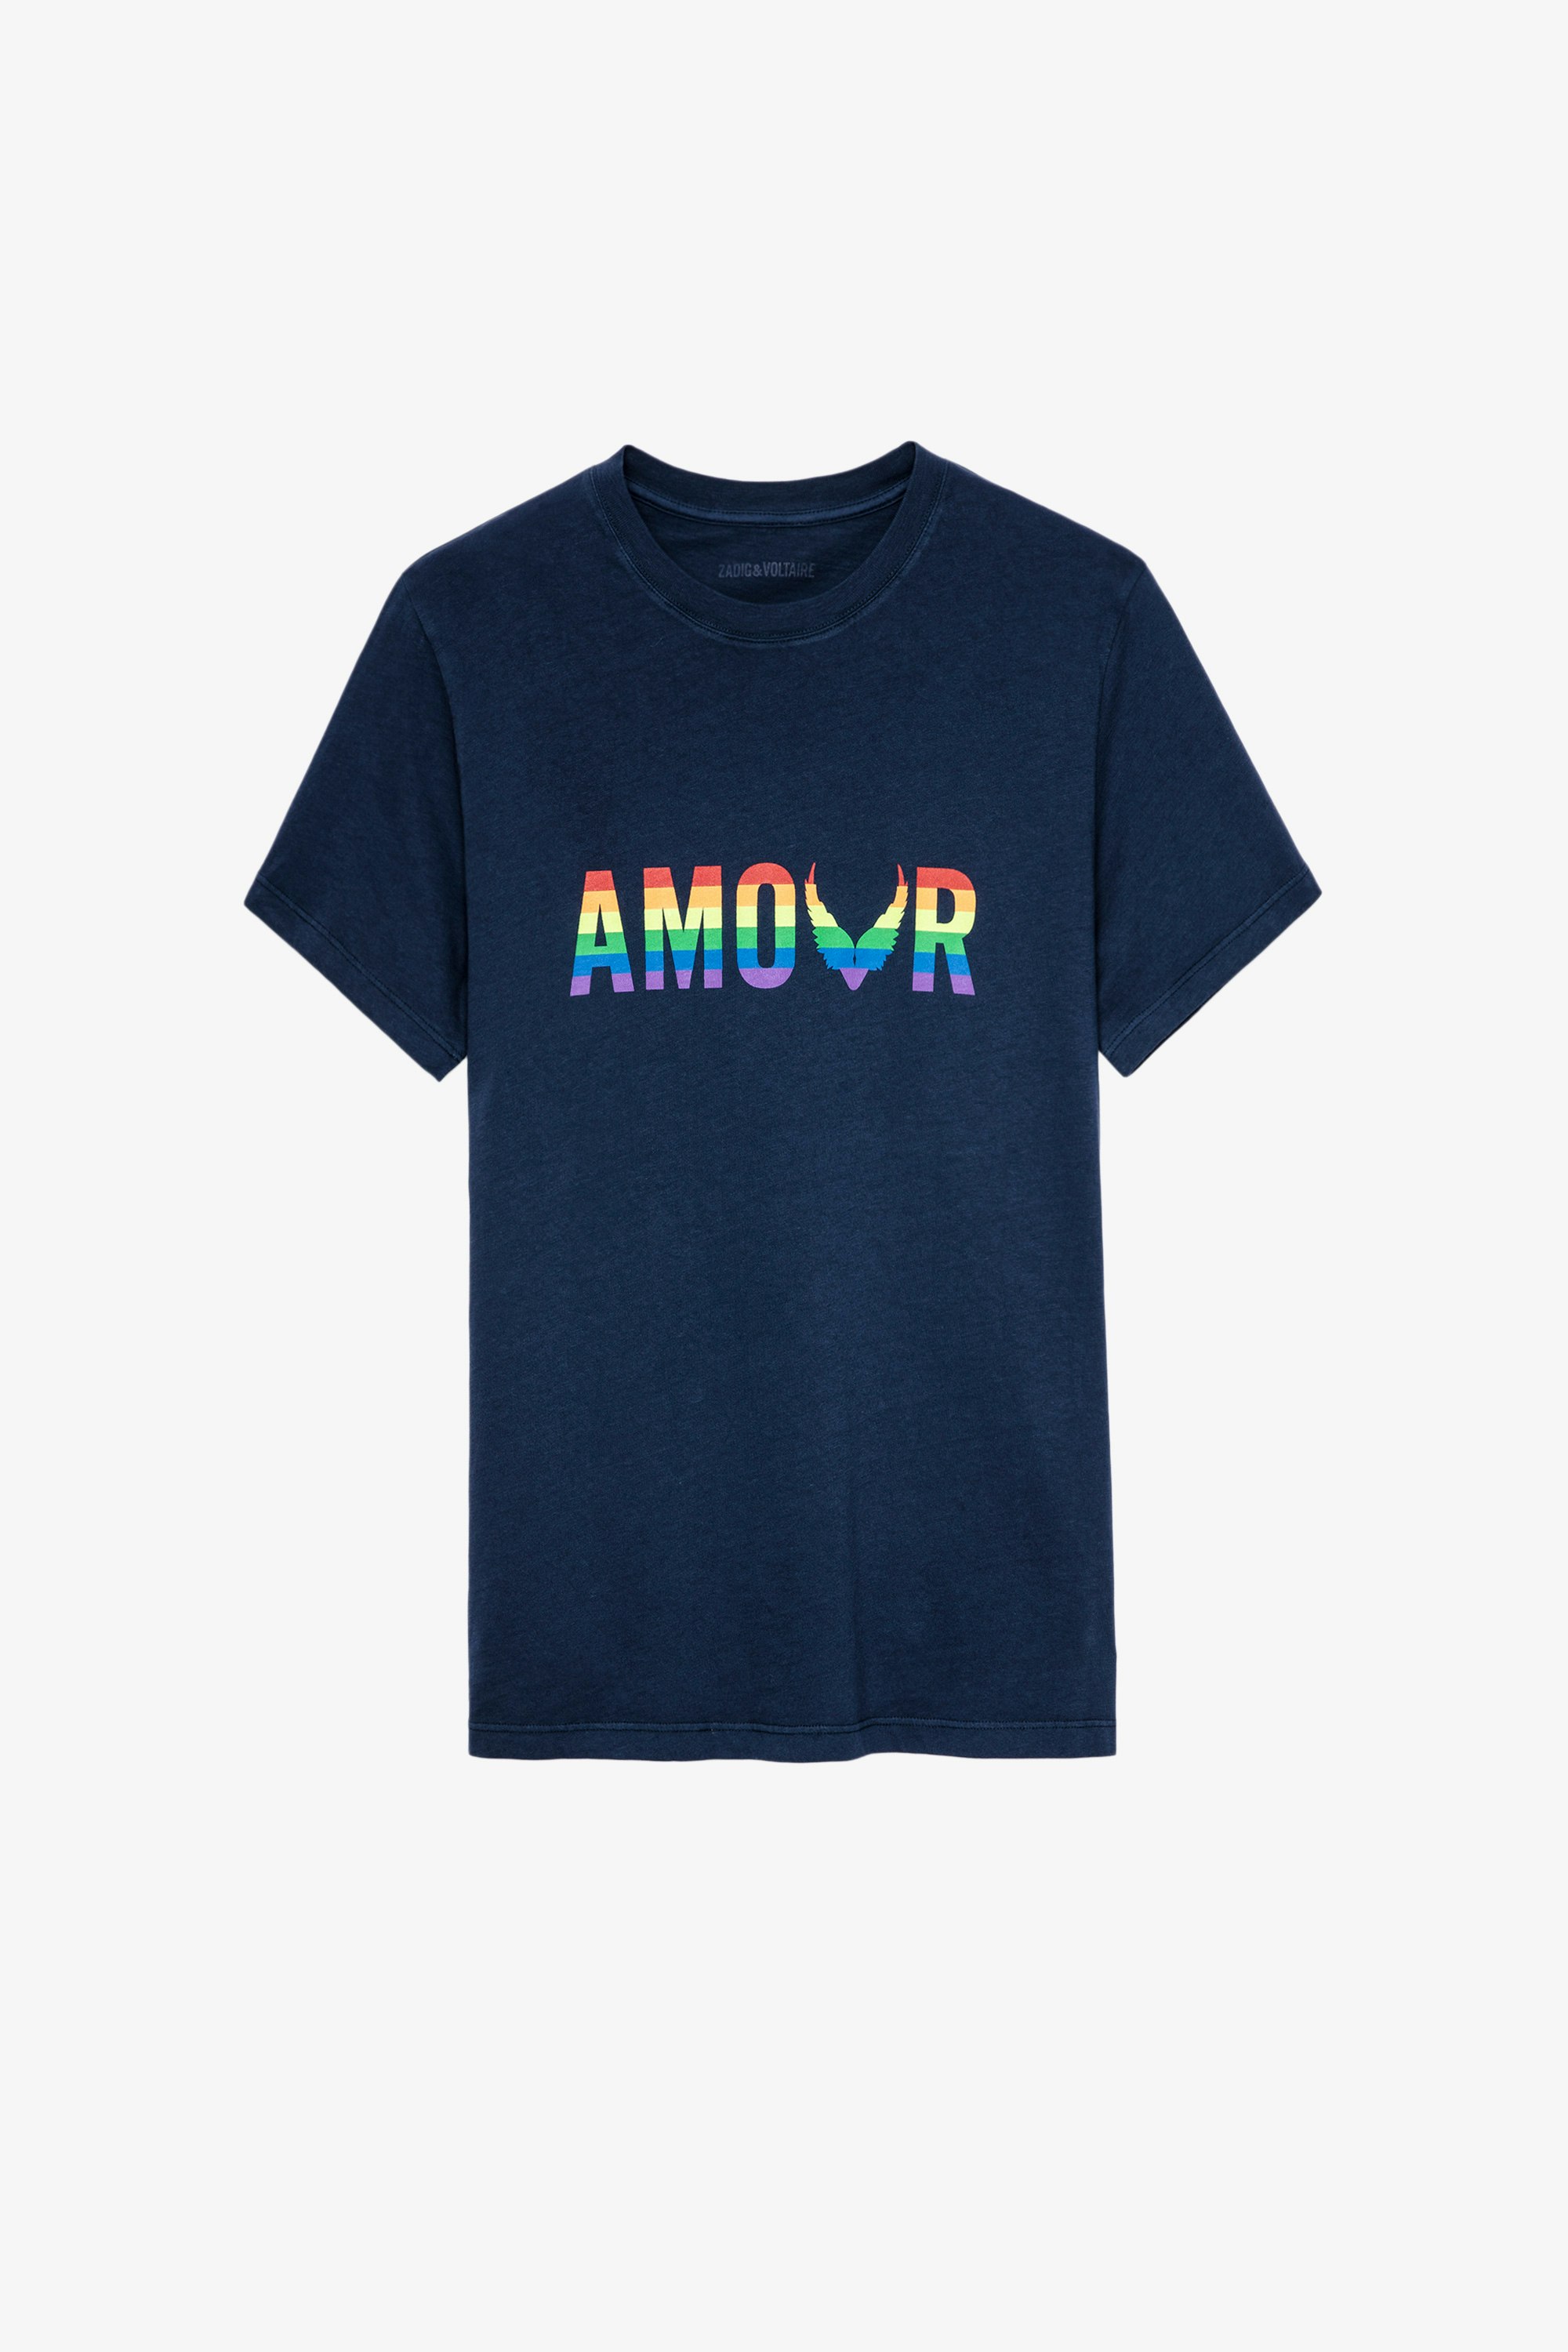 T-Shirt Tommy Amour Wings Damen-T-Shirt aus marineblauer Baumwolle mit mehrfarbigem Amour-Print